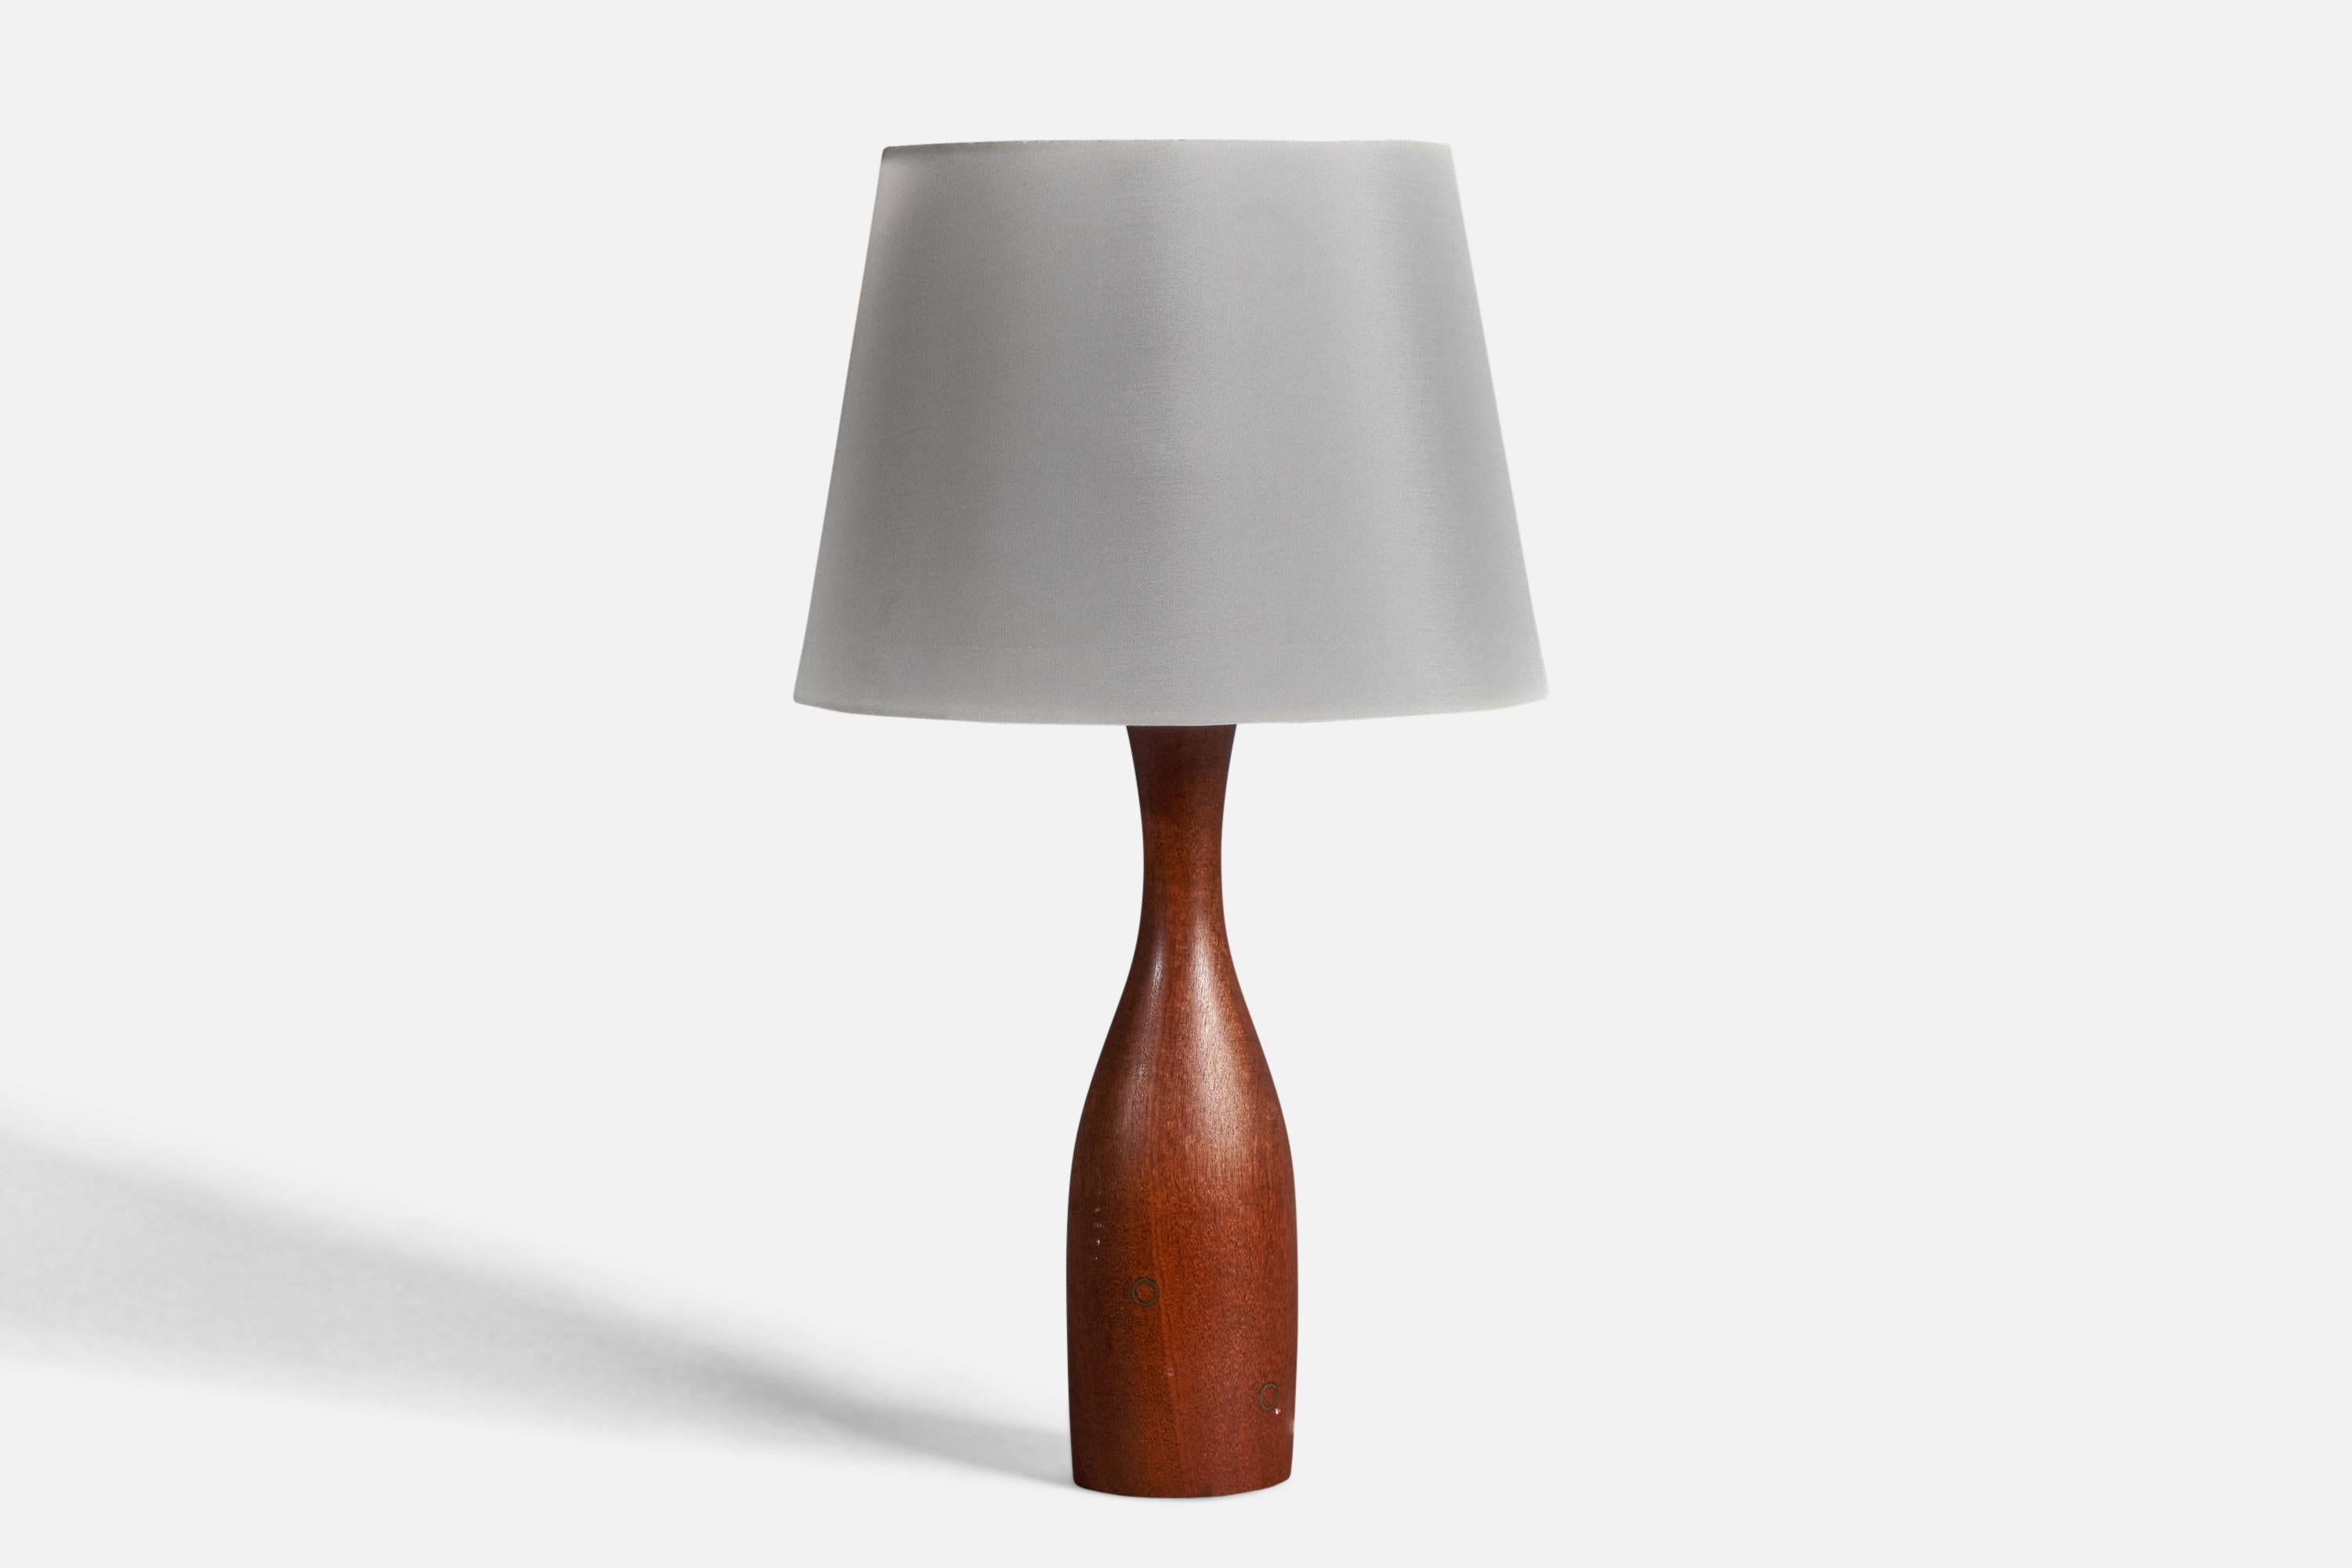 Mid-20th Century Danish Modernist Designer, Organic Table Lamp, Teak, Brass Inlays, Denmark 1950s For Sale